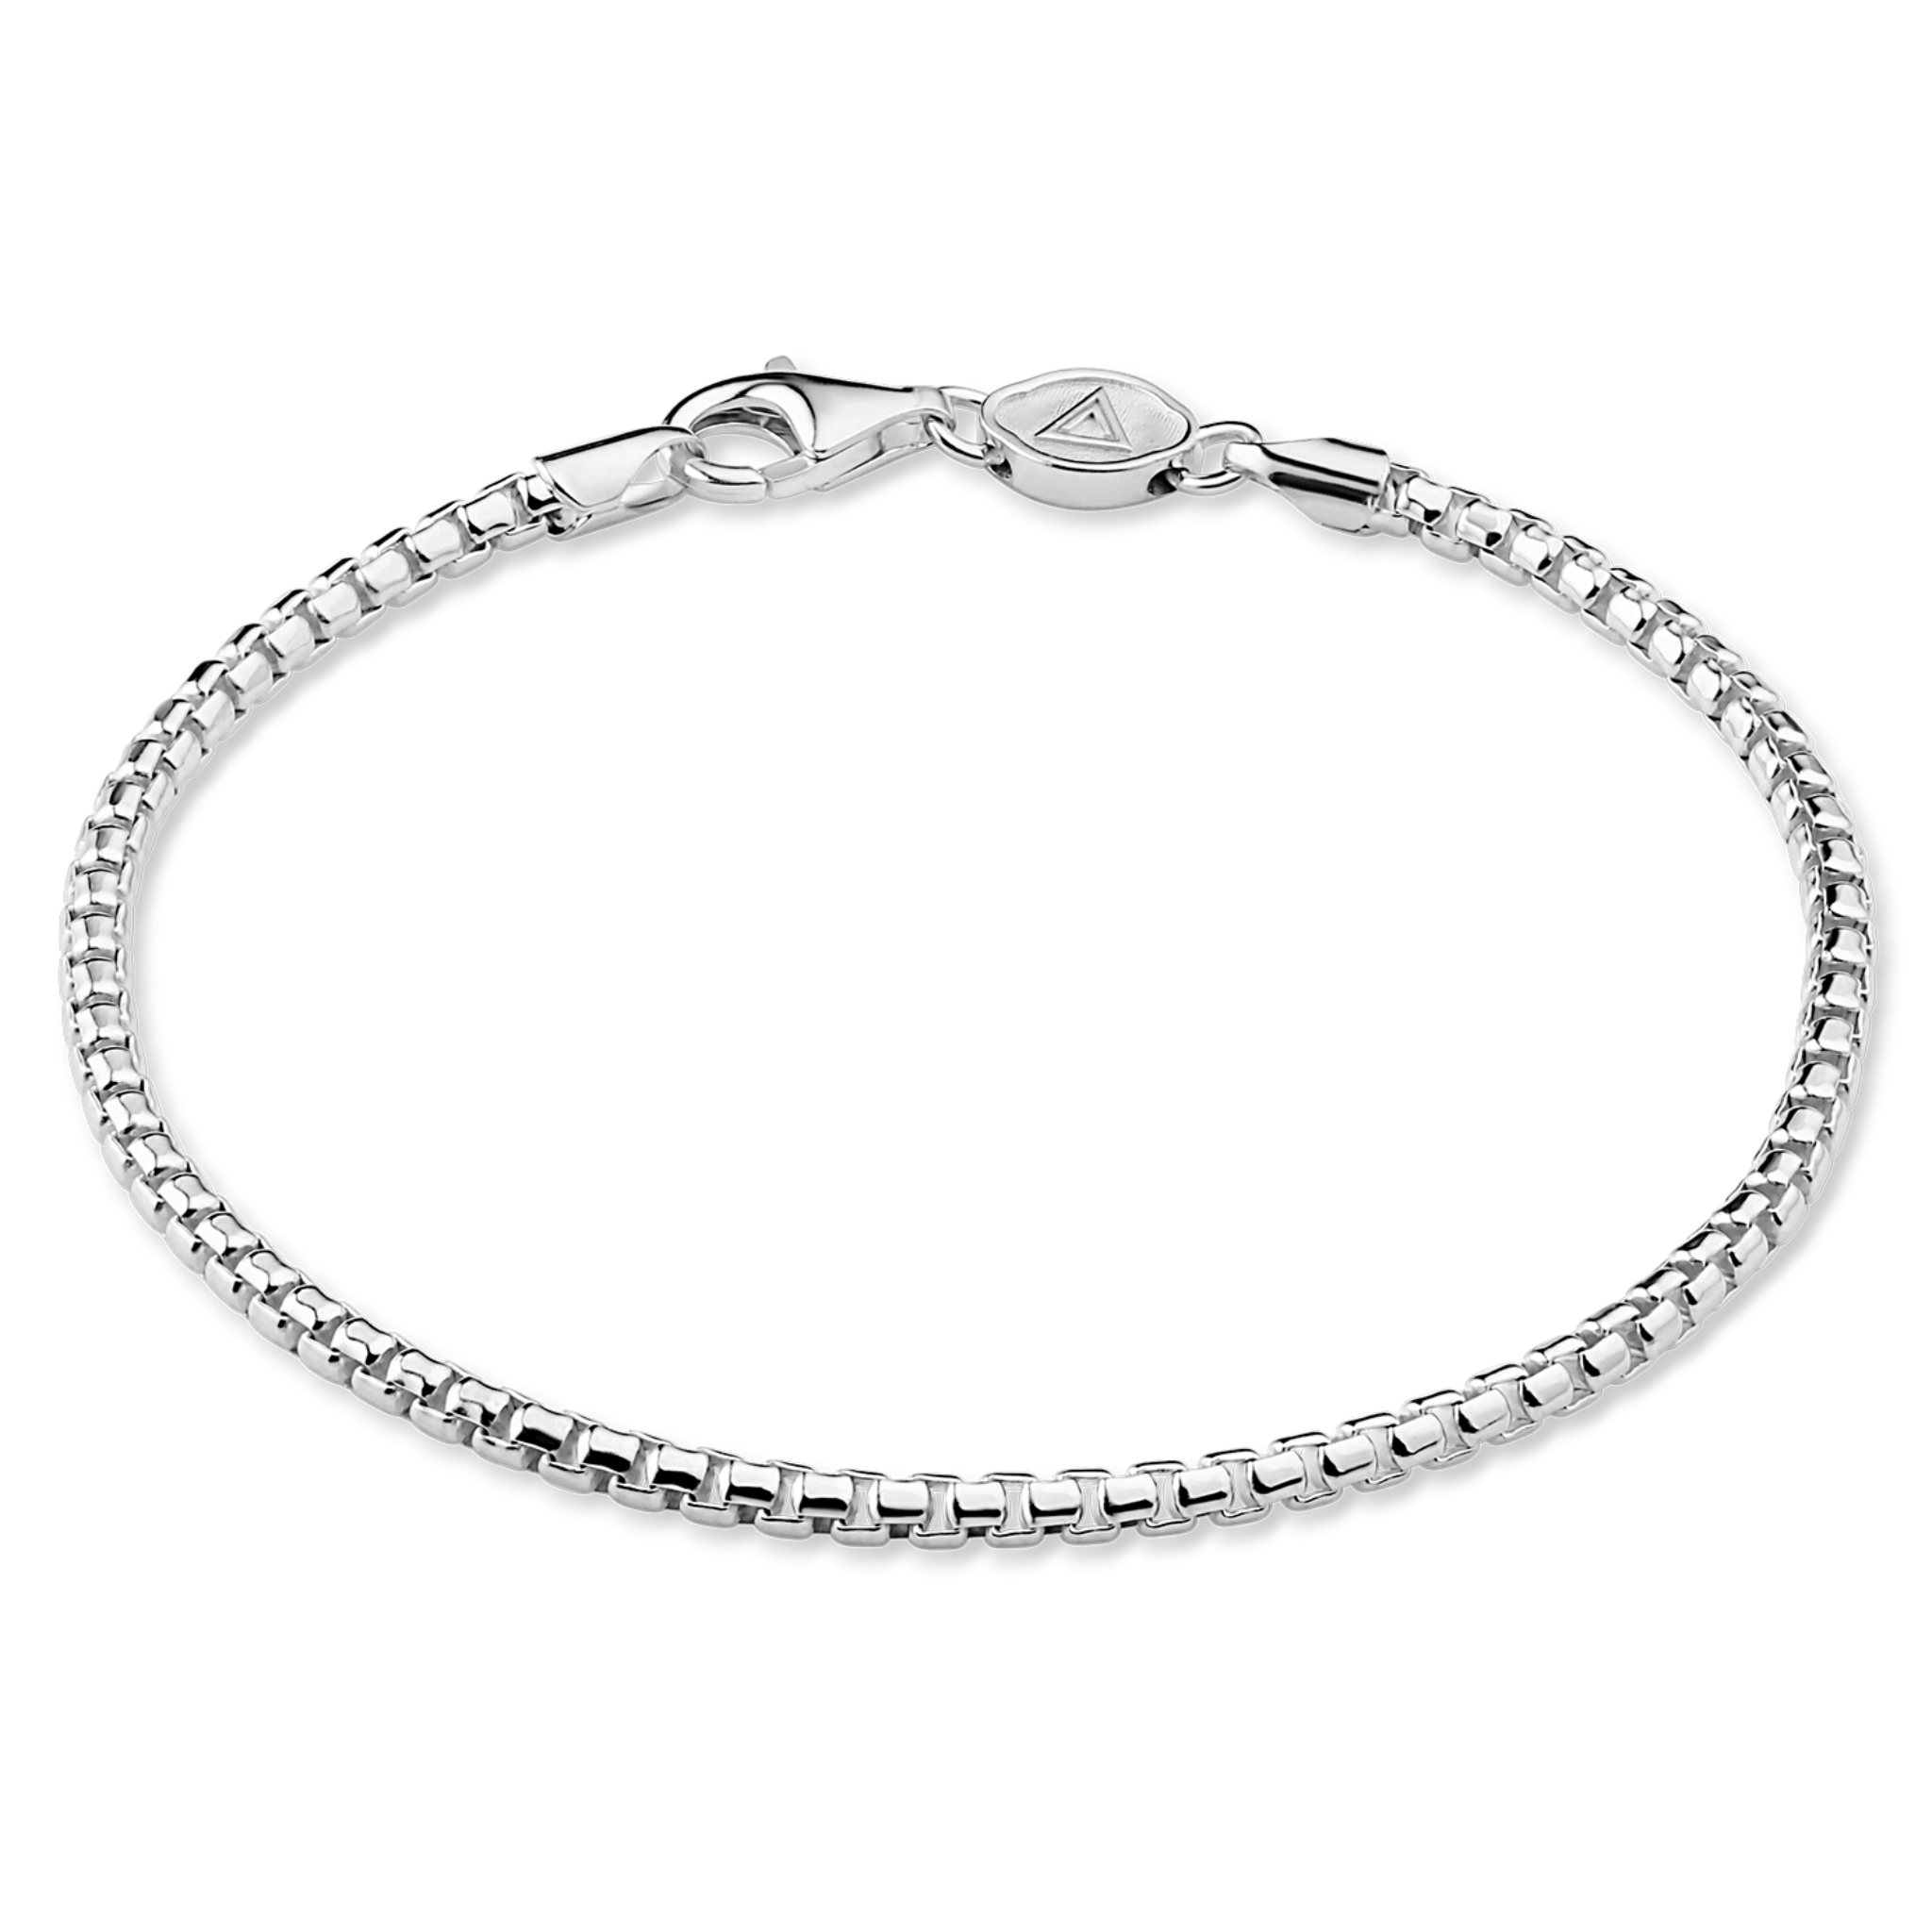 Clear Quartz Bracelet | Buy Online Clear Quartz Crystal Faceted Stone  Bracelet - Shubhanjali